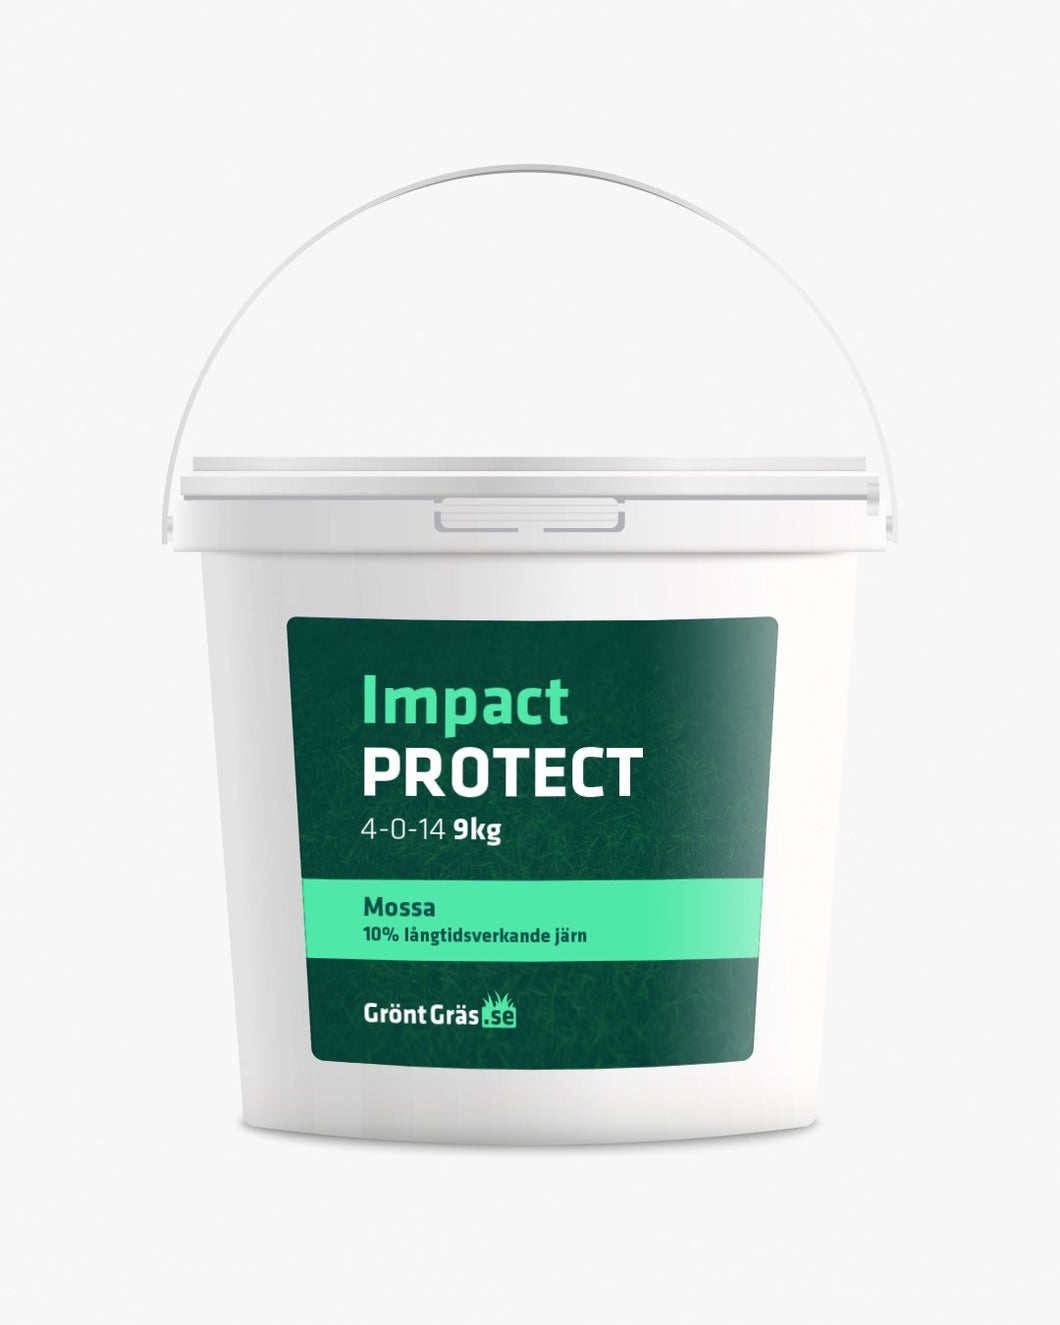 Impact PROTECT 4-0-14 / Mossa